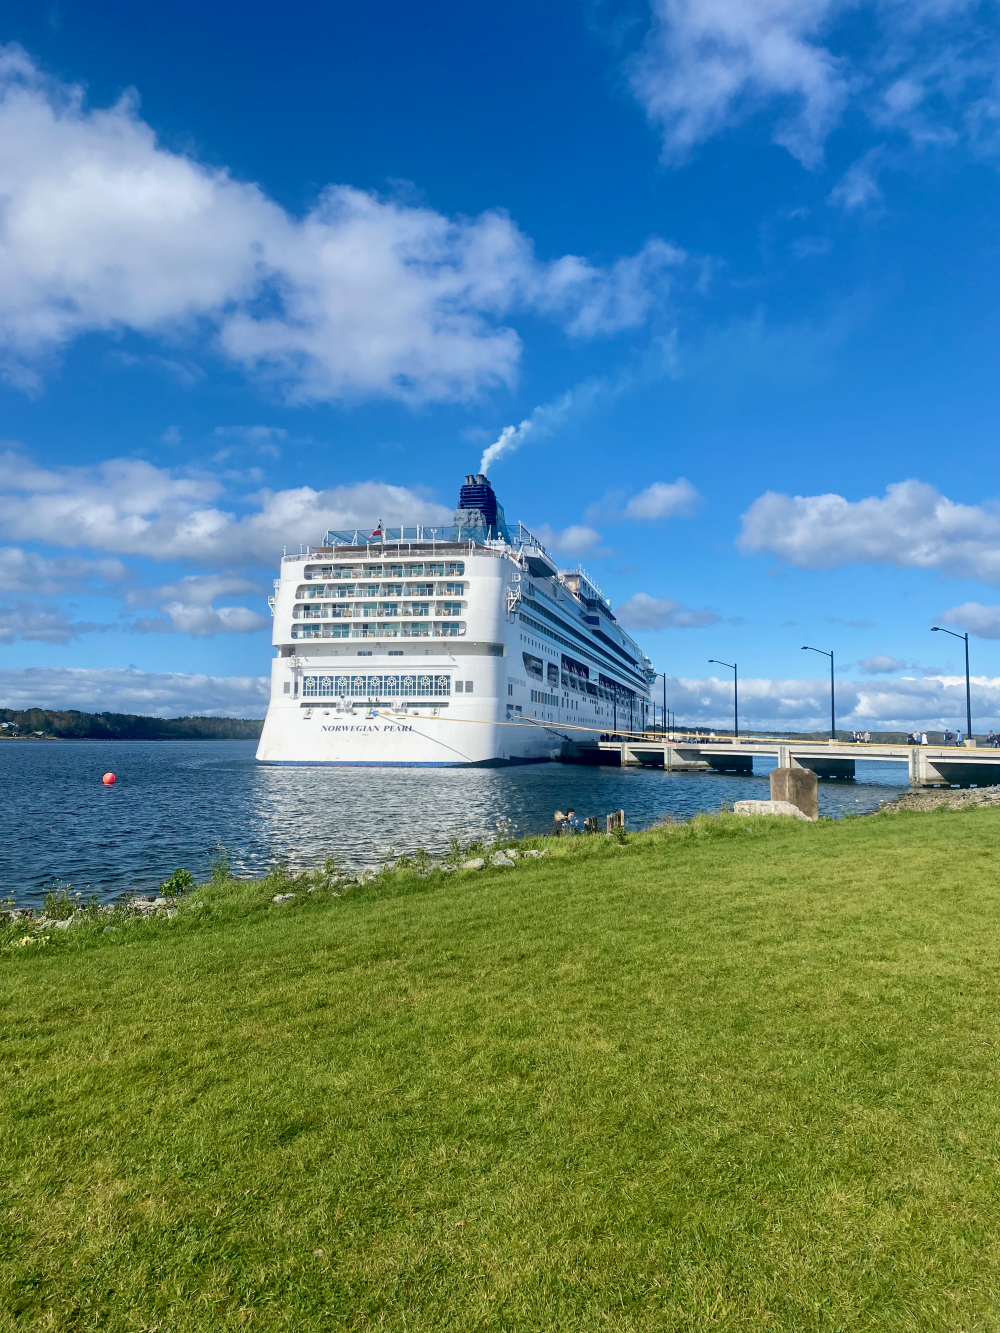 Norwegian Pearl in port at Sydney, Nova Scotia